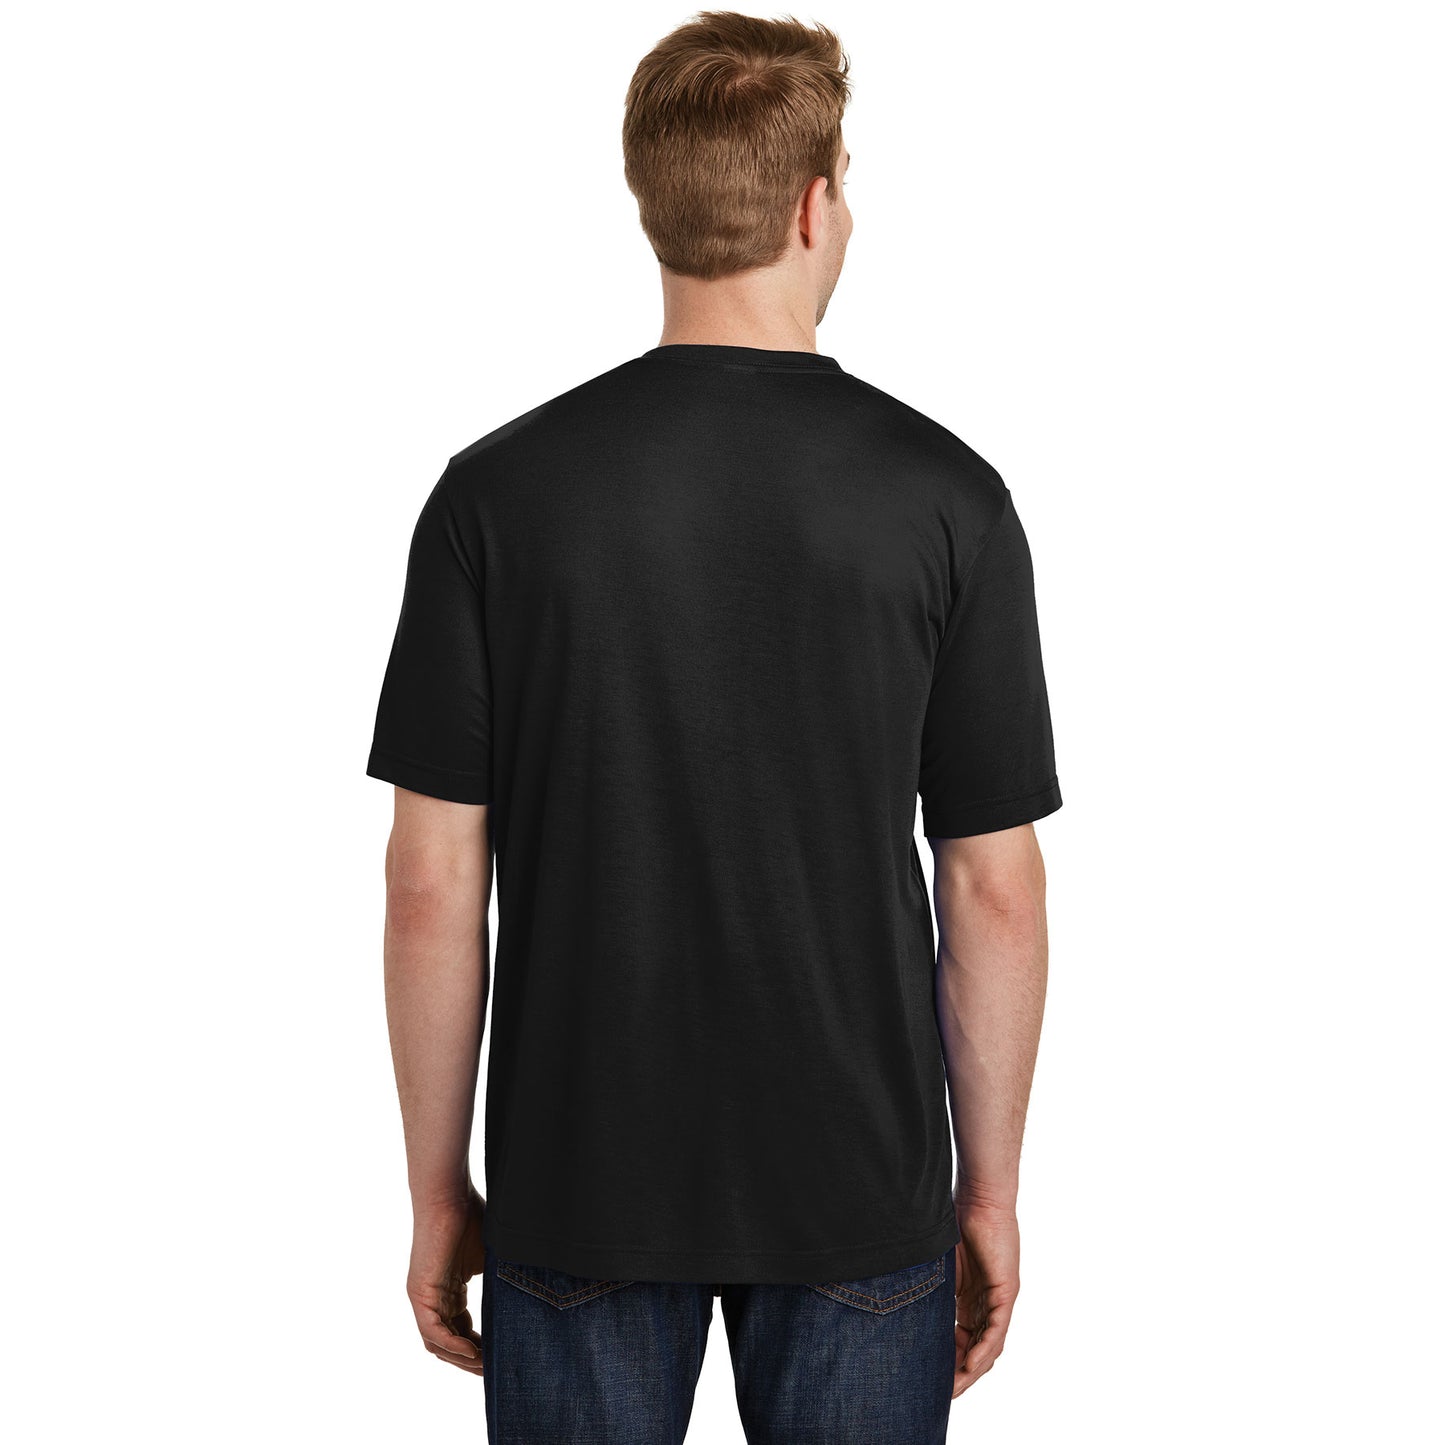 American Ninja Warrior Men's Black Performance Shirt